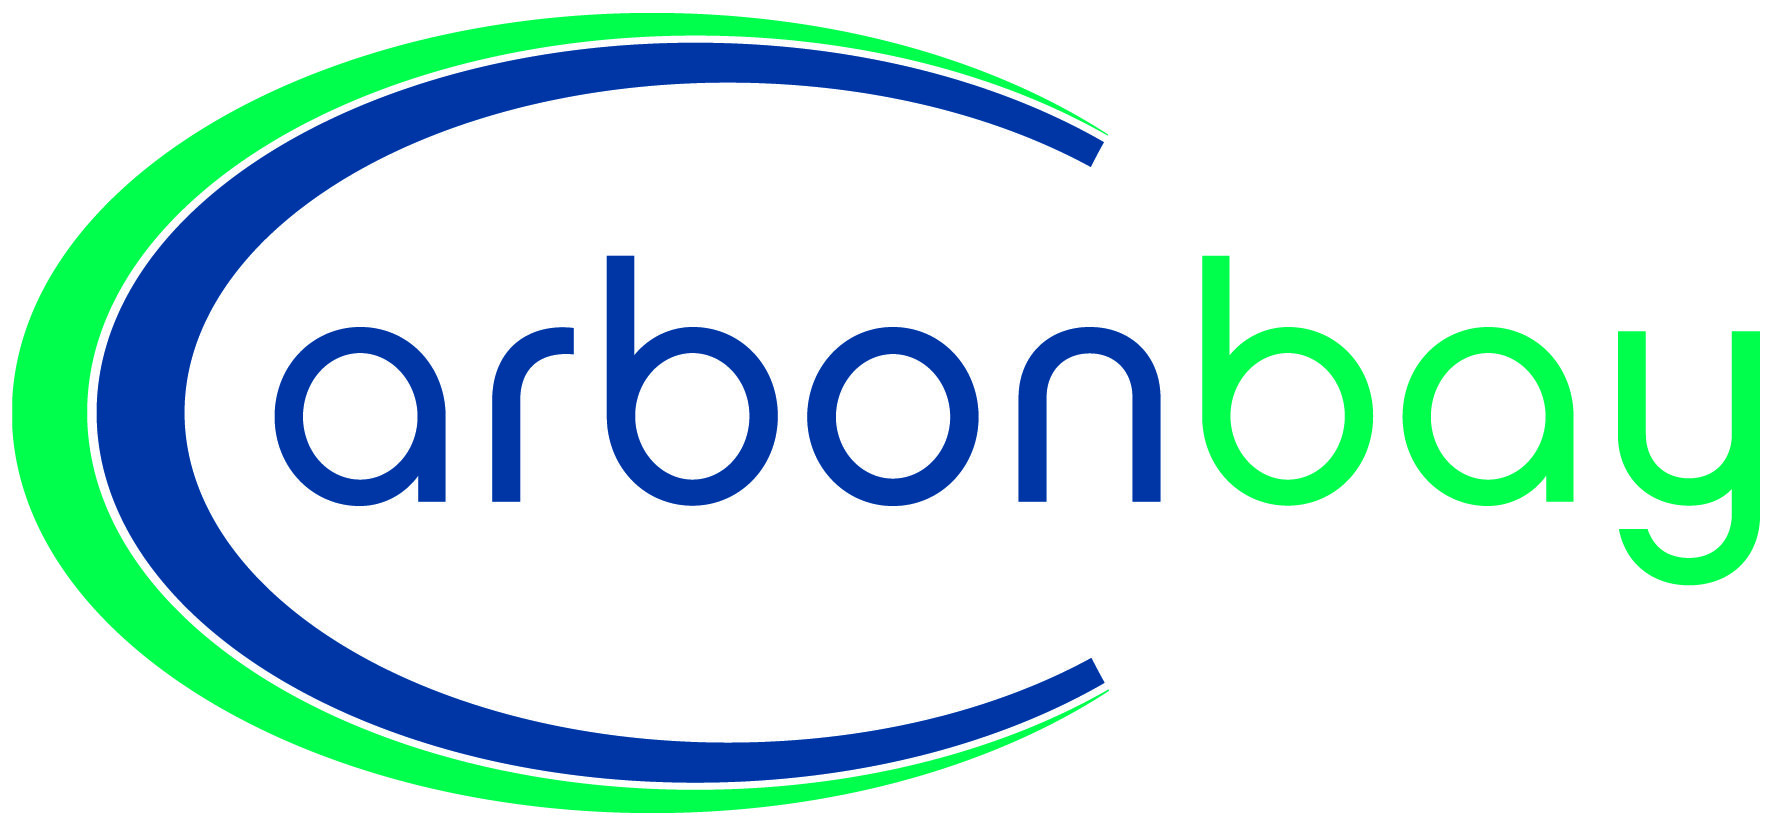 Carbonbay-Logo_pos_CMYK_300dpi.jpg